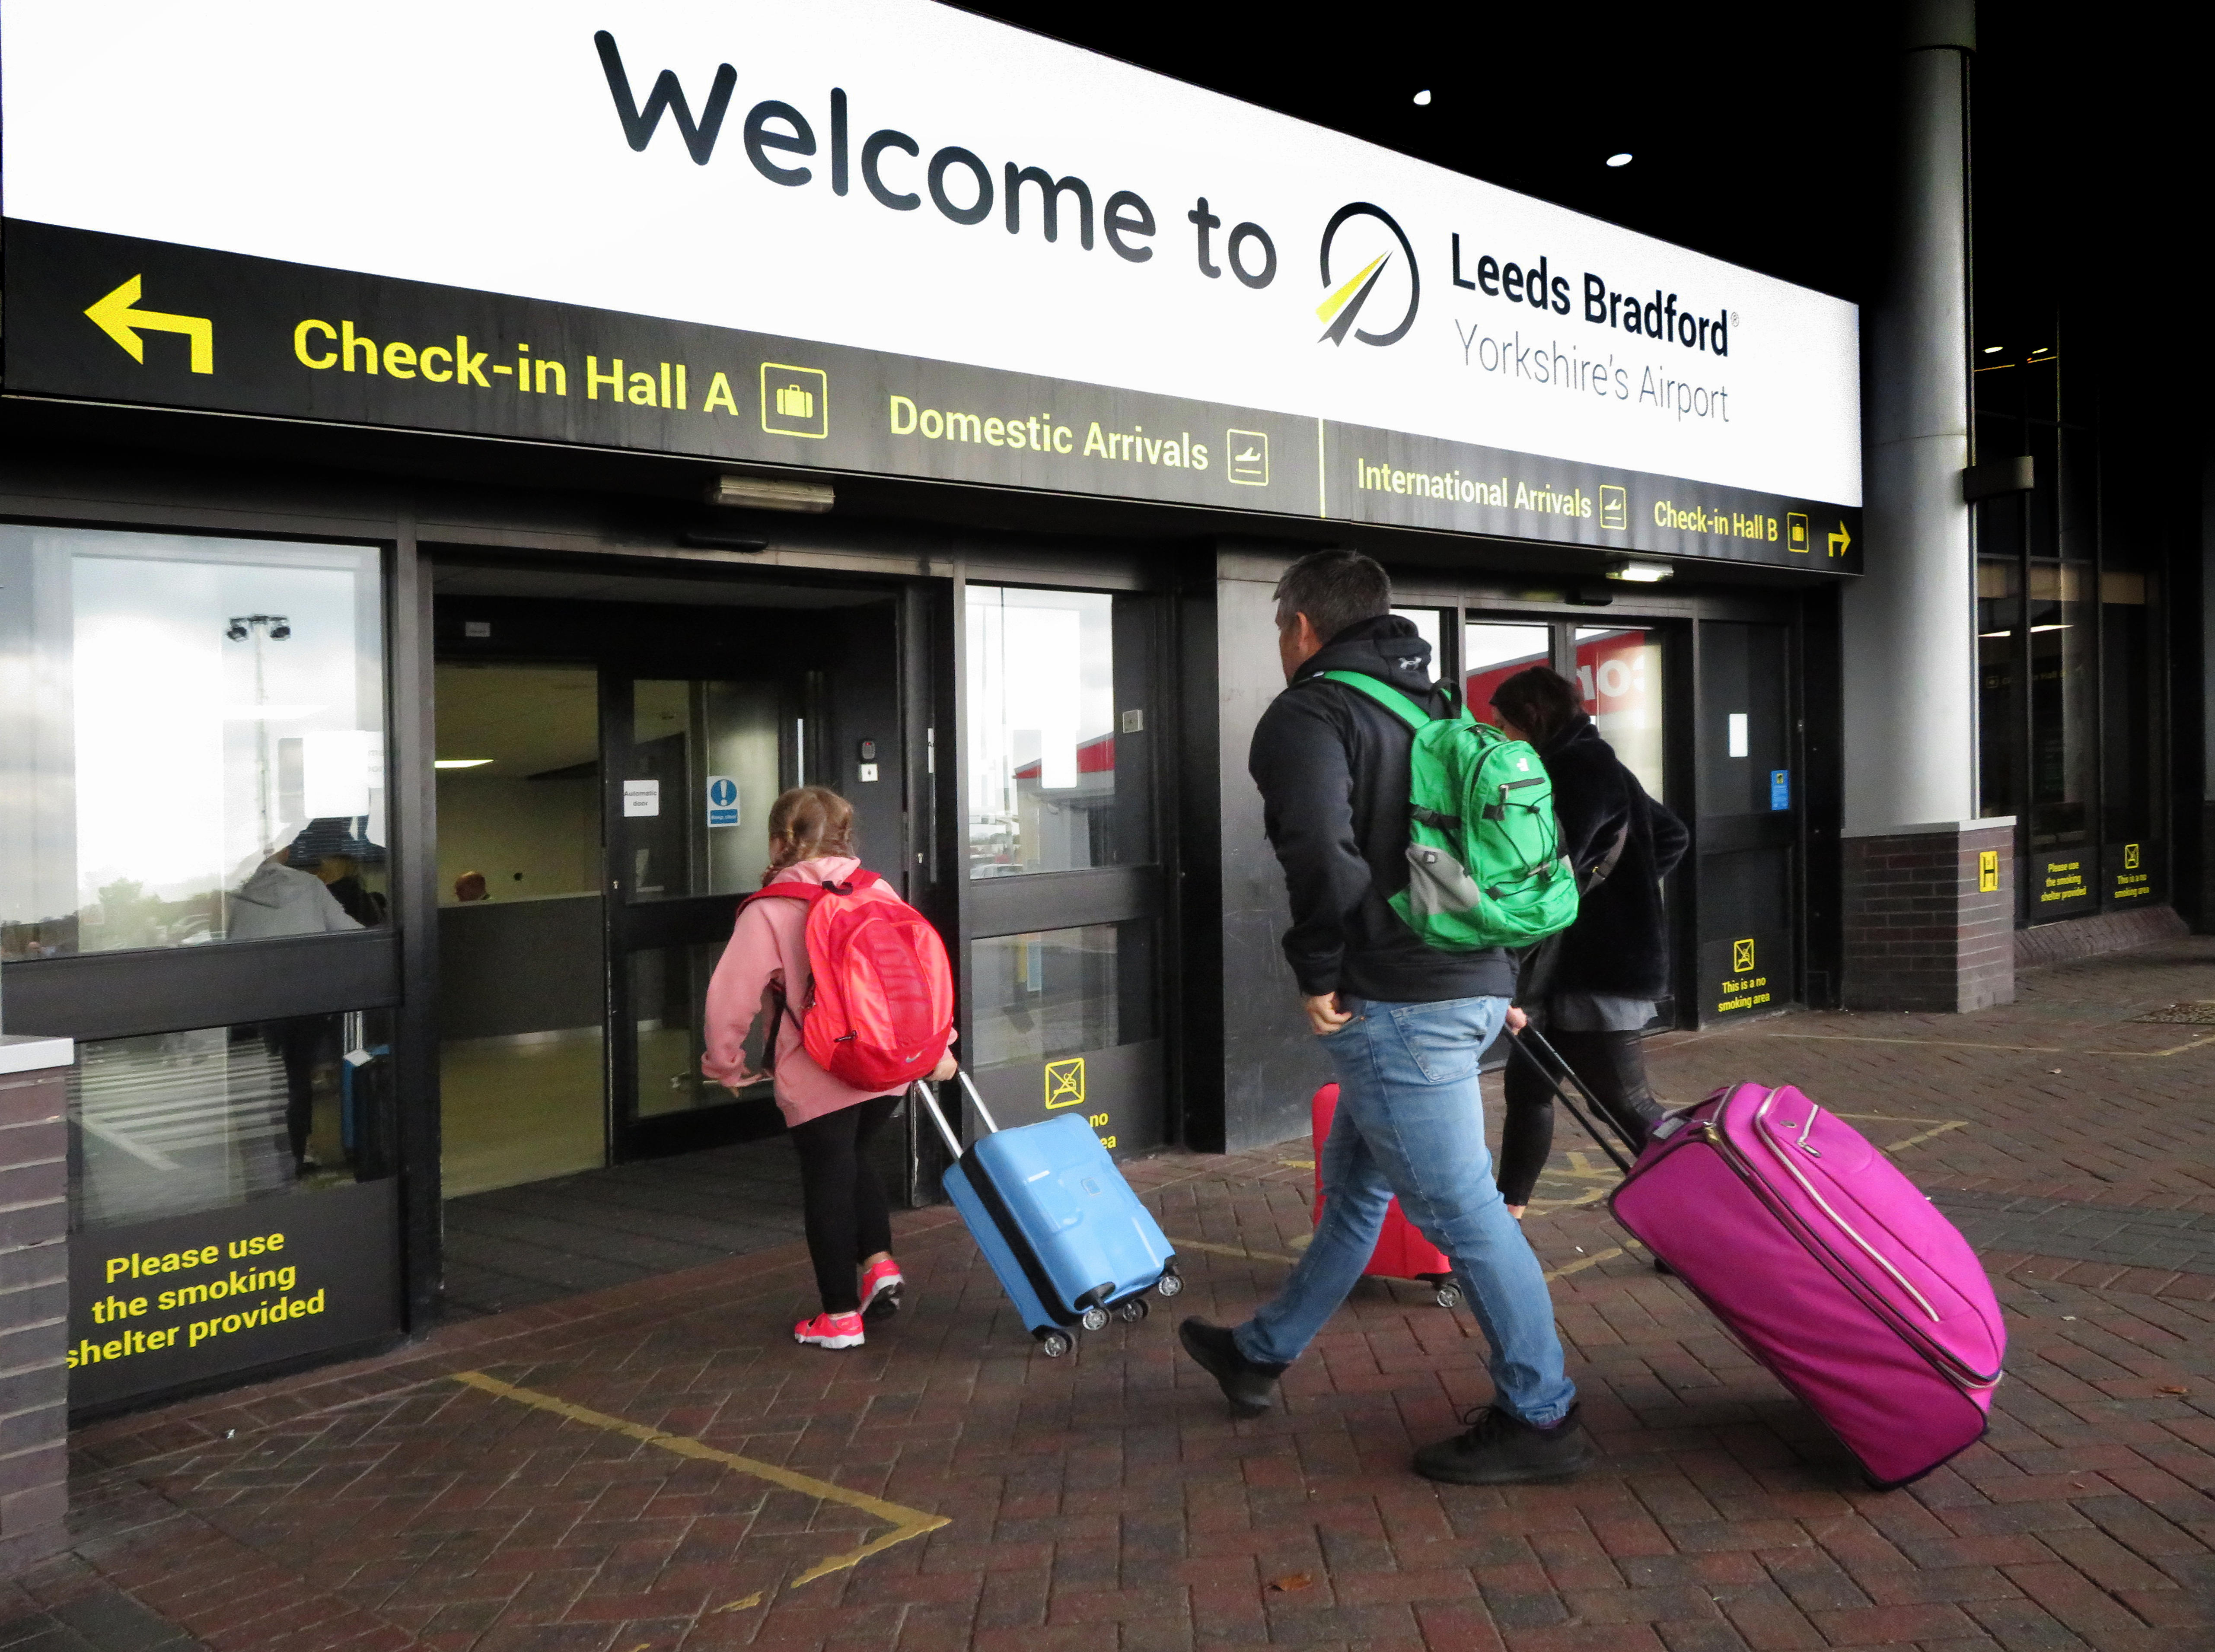 Passengers arrive at Leeds Bradford Airport